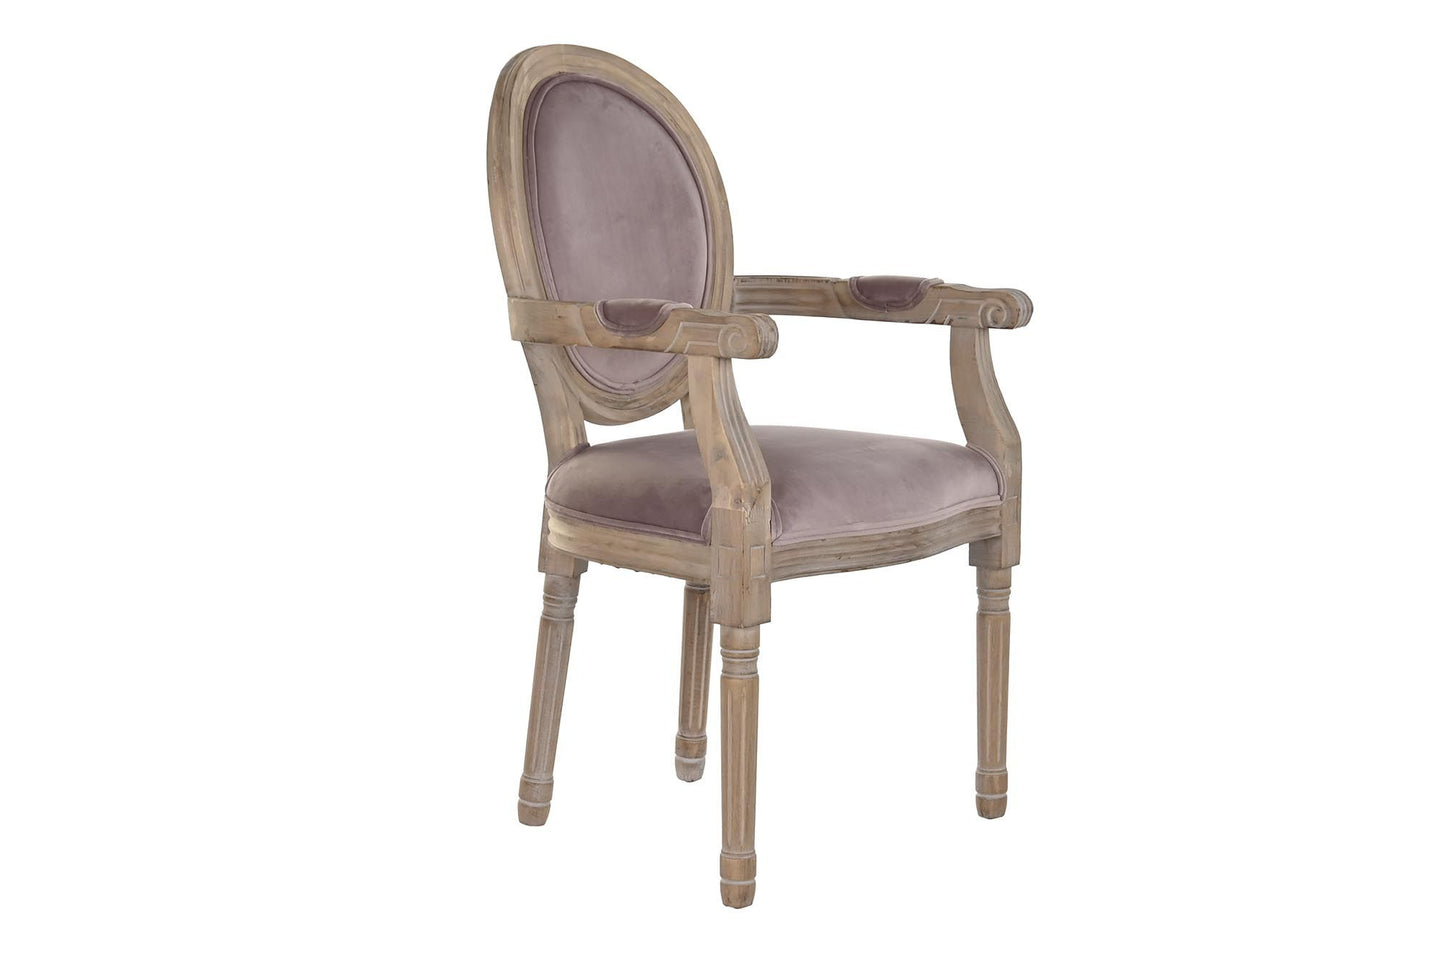 Set de 2 sillas Trad Louis XVI rosa